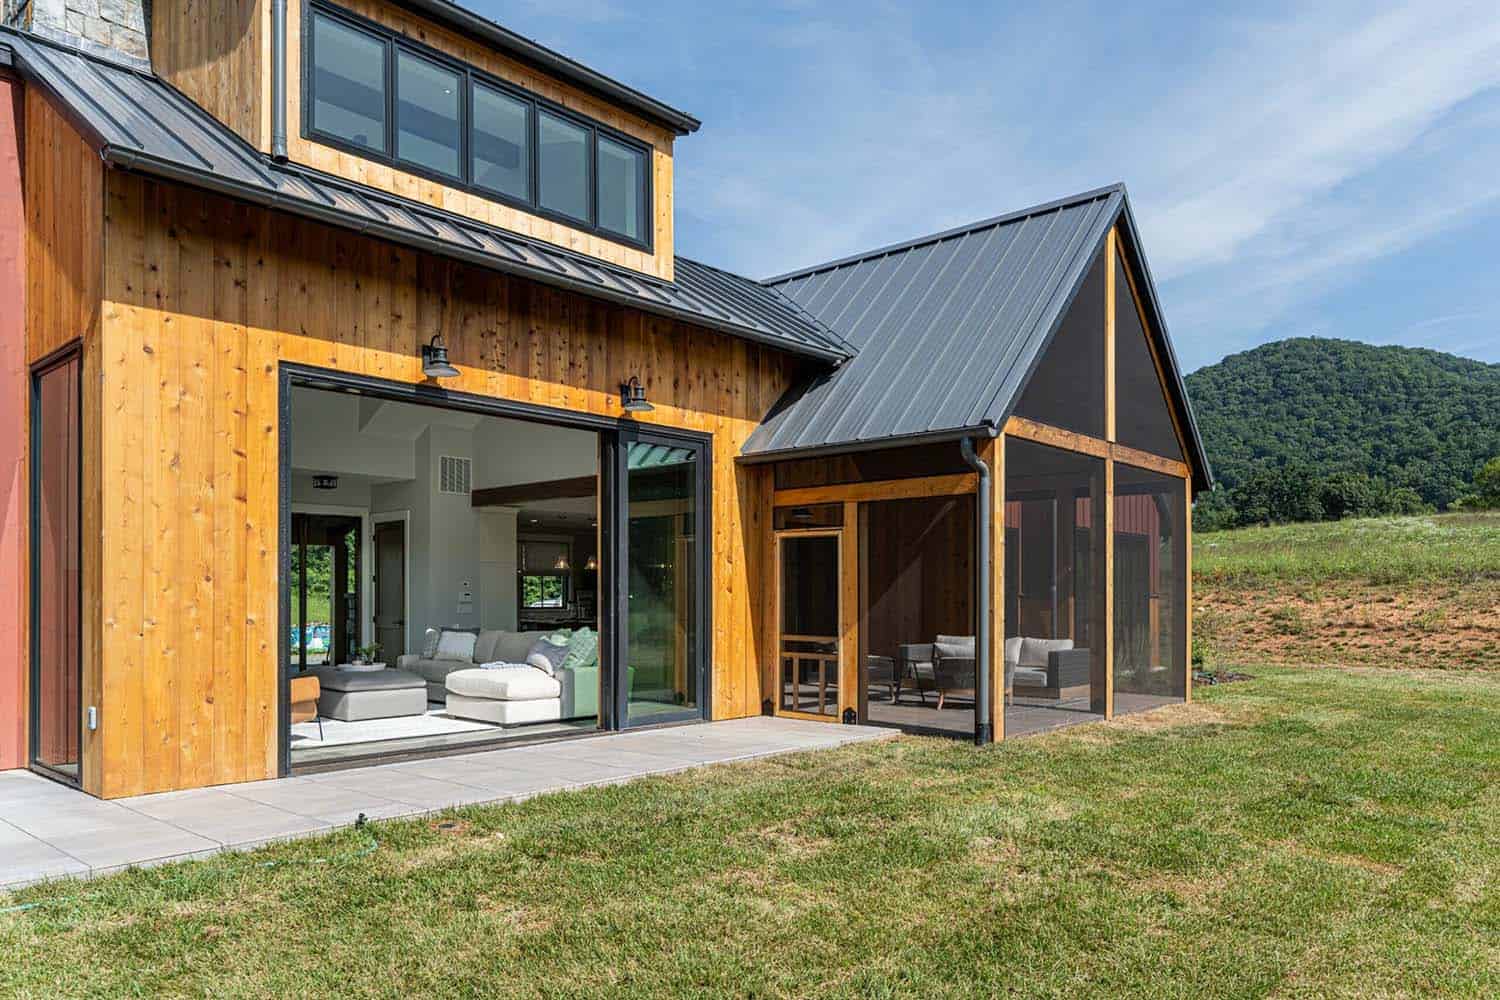 modern-farmhouse-home-exterior